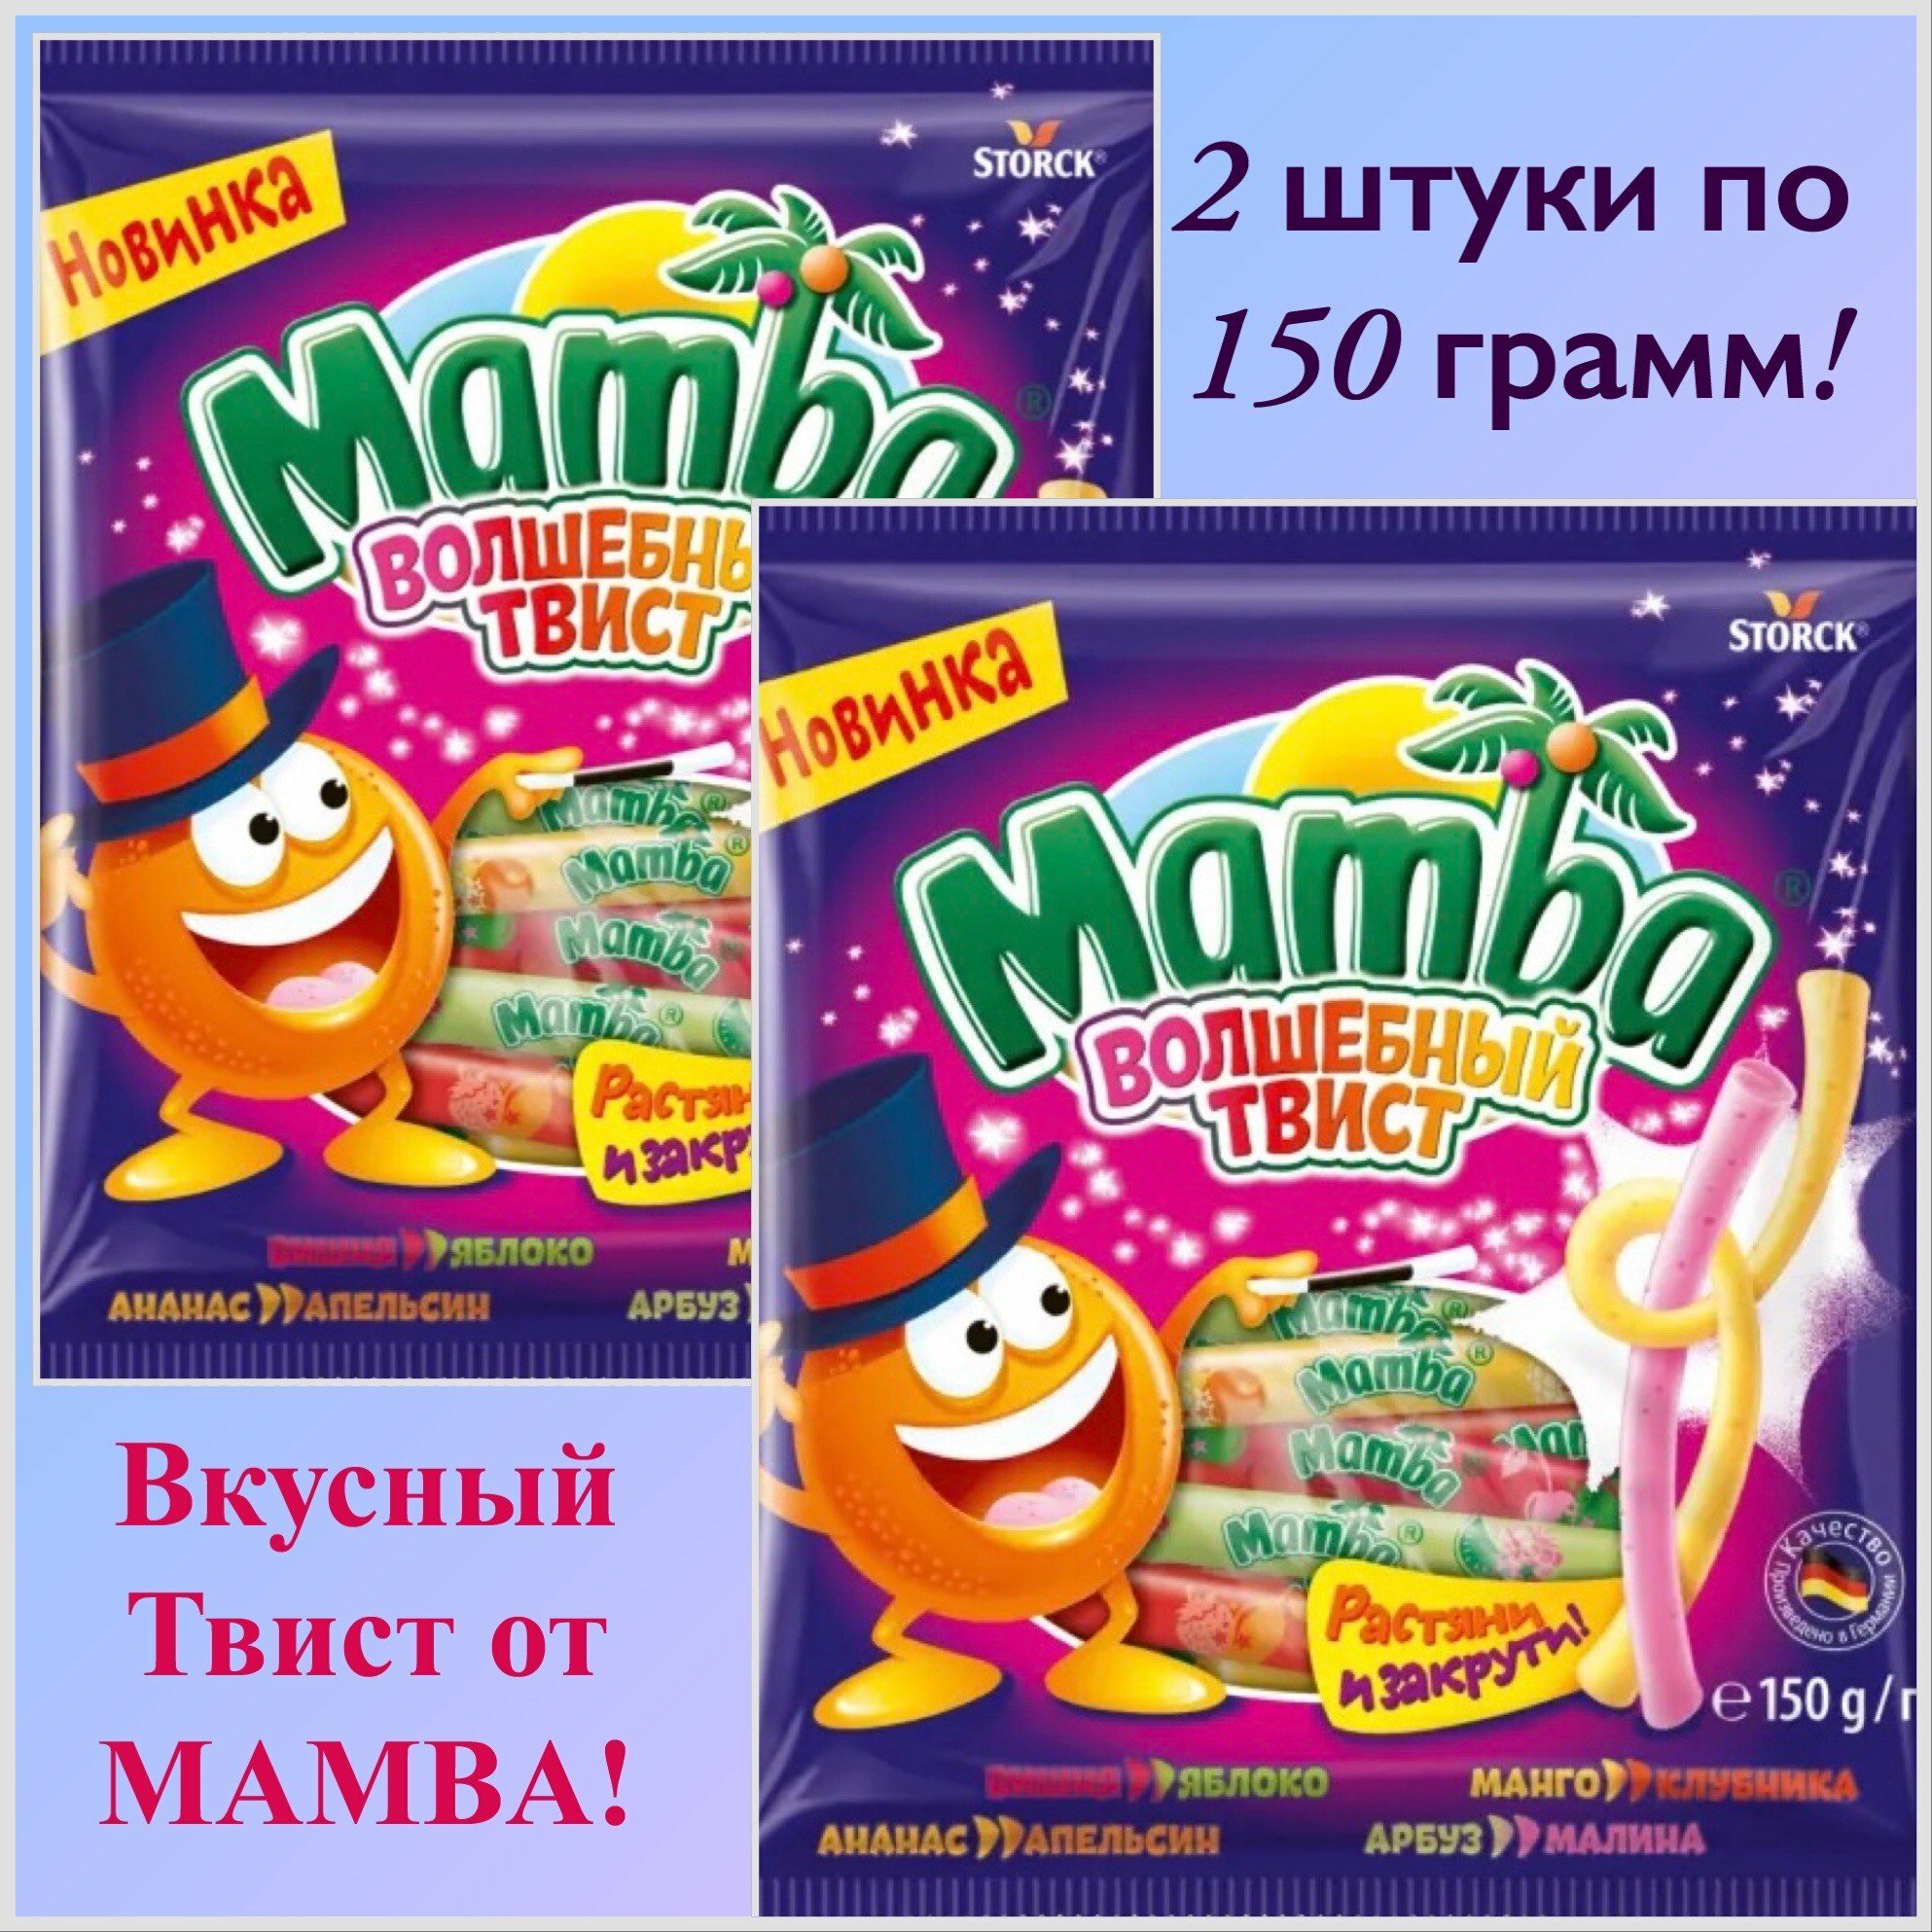 Конфеты Mamba "Волшебный Твист", 2 штуки по 150 грамм.